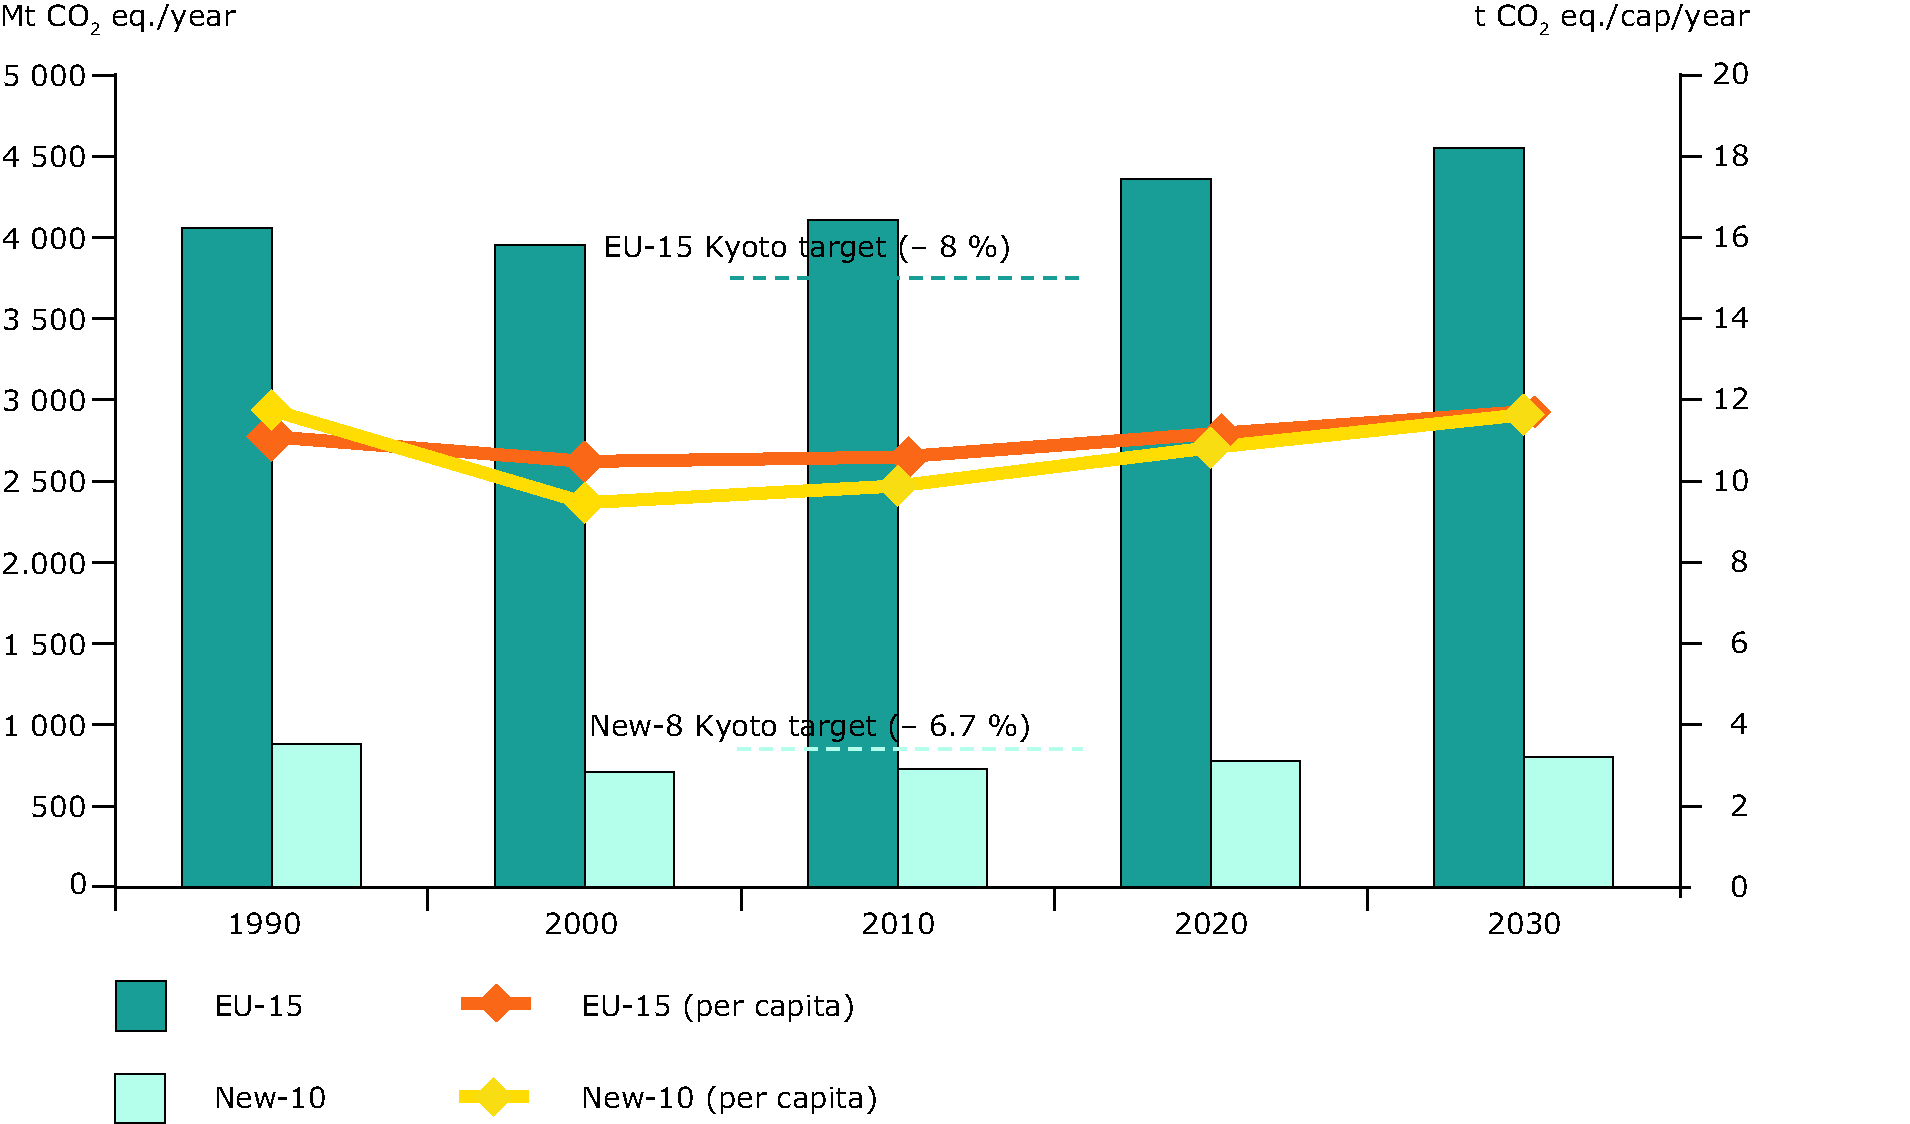 Total GHG emissions in Europe 1990-2030 (baseline scenario)